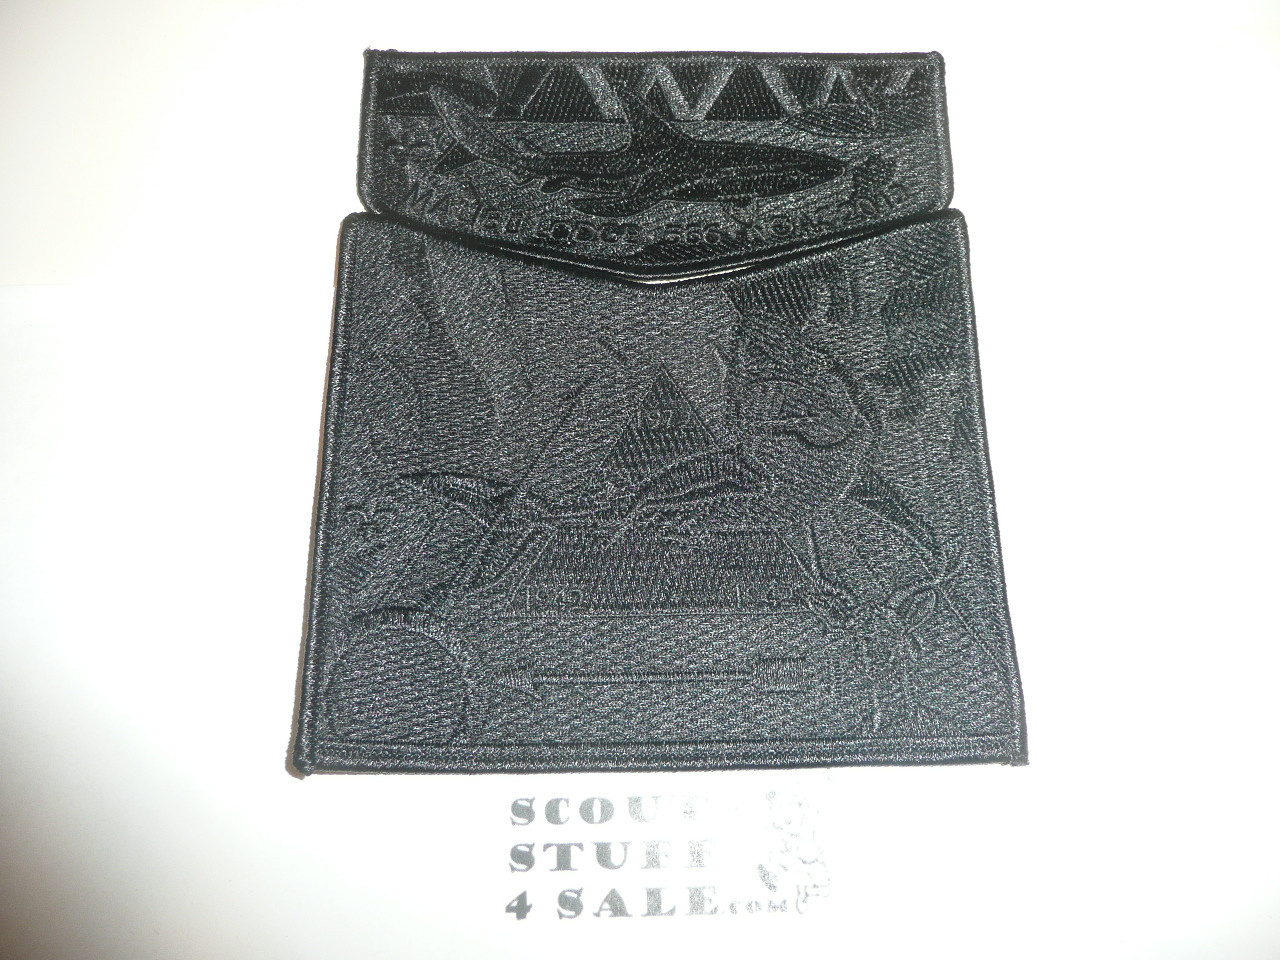 Order of the Arrow Lodge #566 Malibu 2012 NOAC 2 Piece Flap Patch Set, Black Ghost